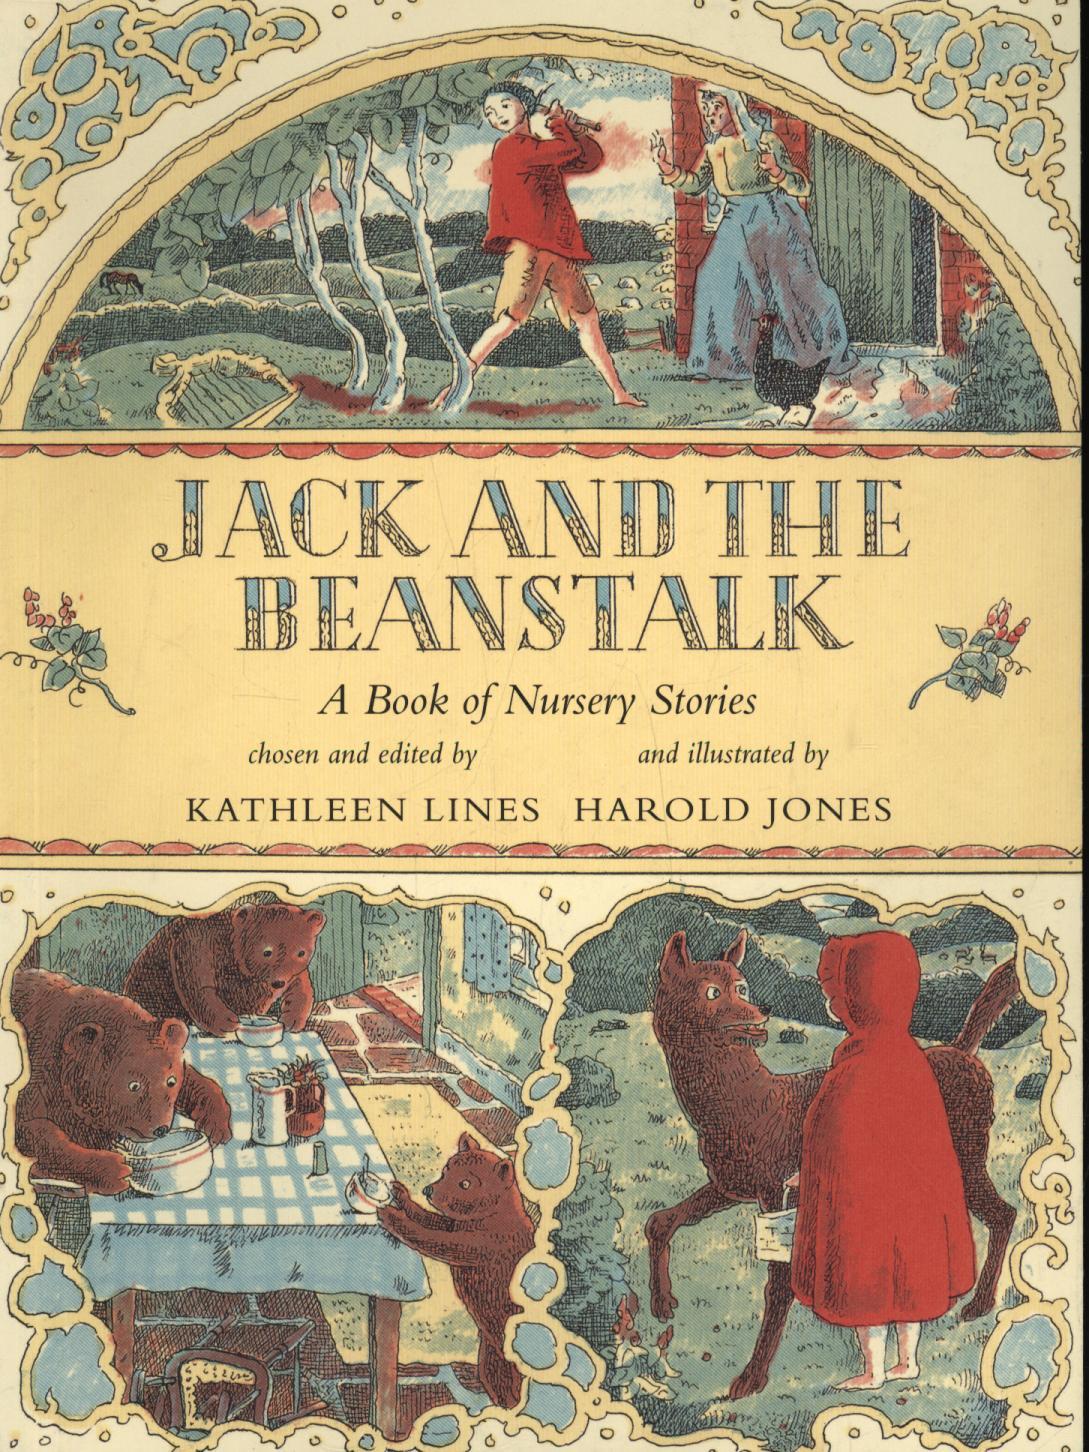 Jack and the Beanstalk: A Book of Nursery Stories - Kathleen Lines & Harold Jones